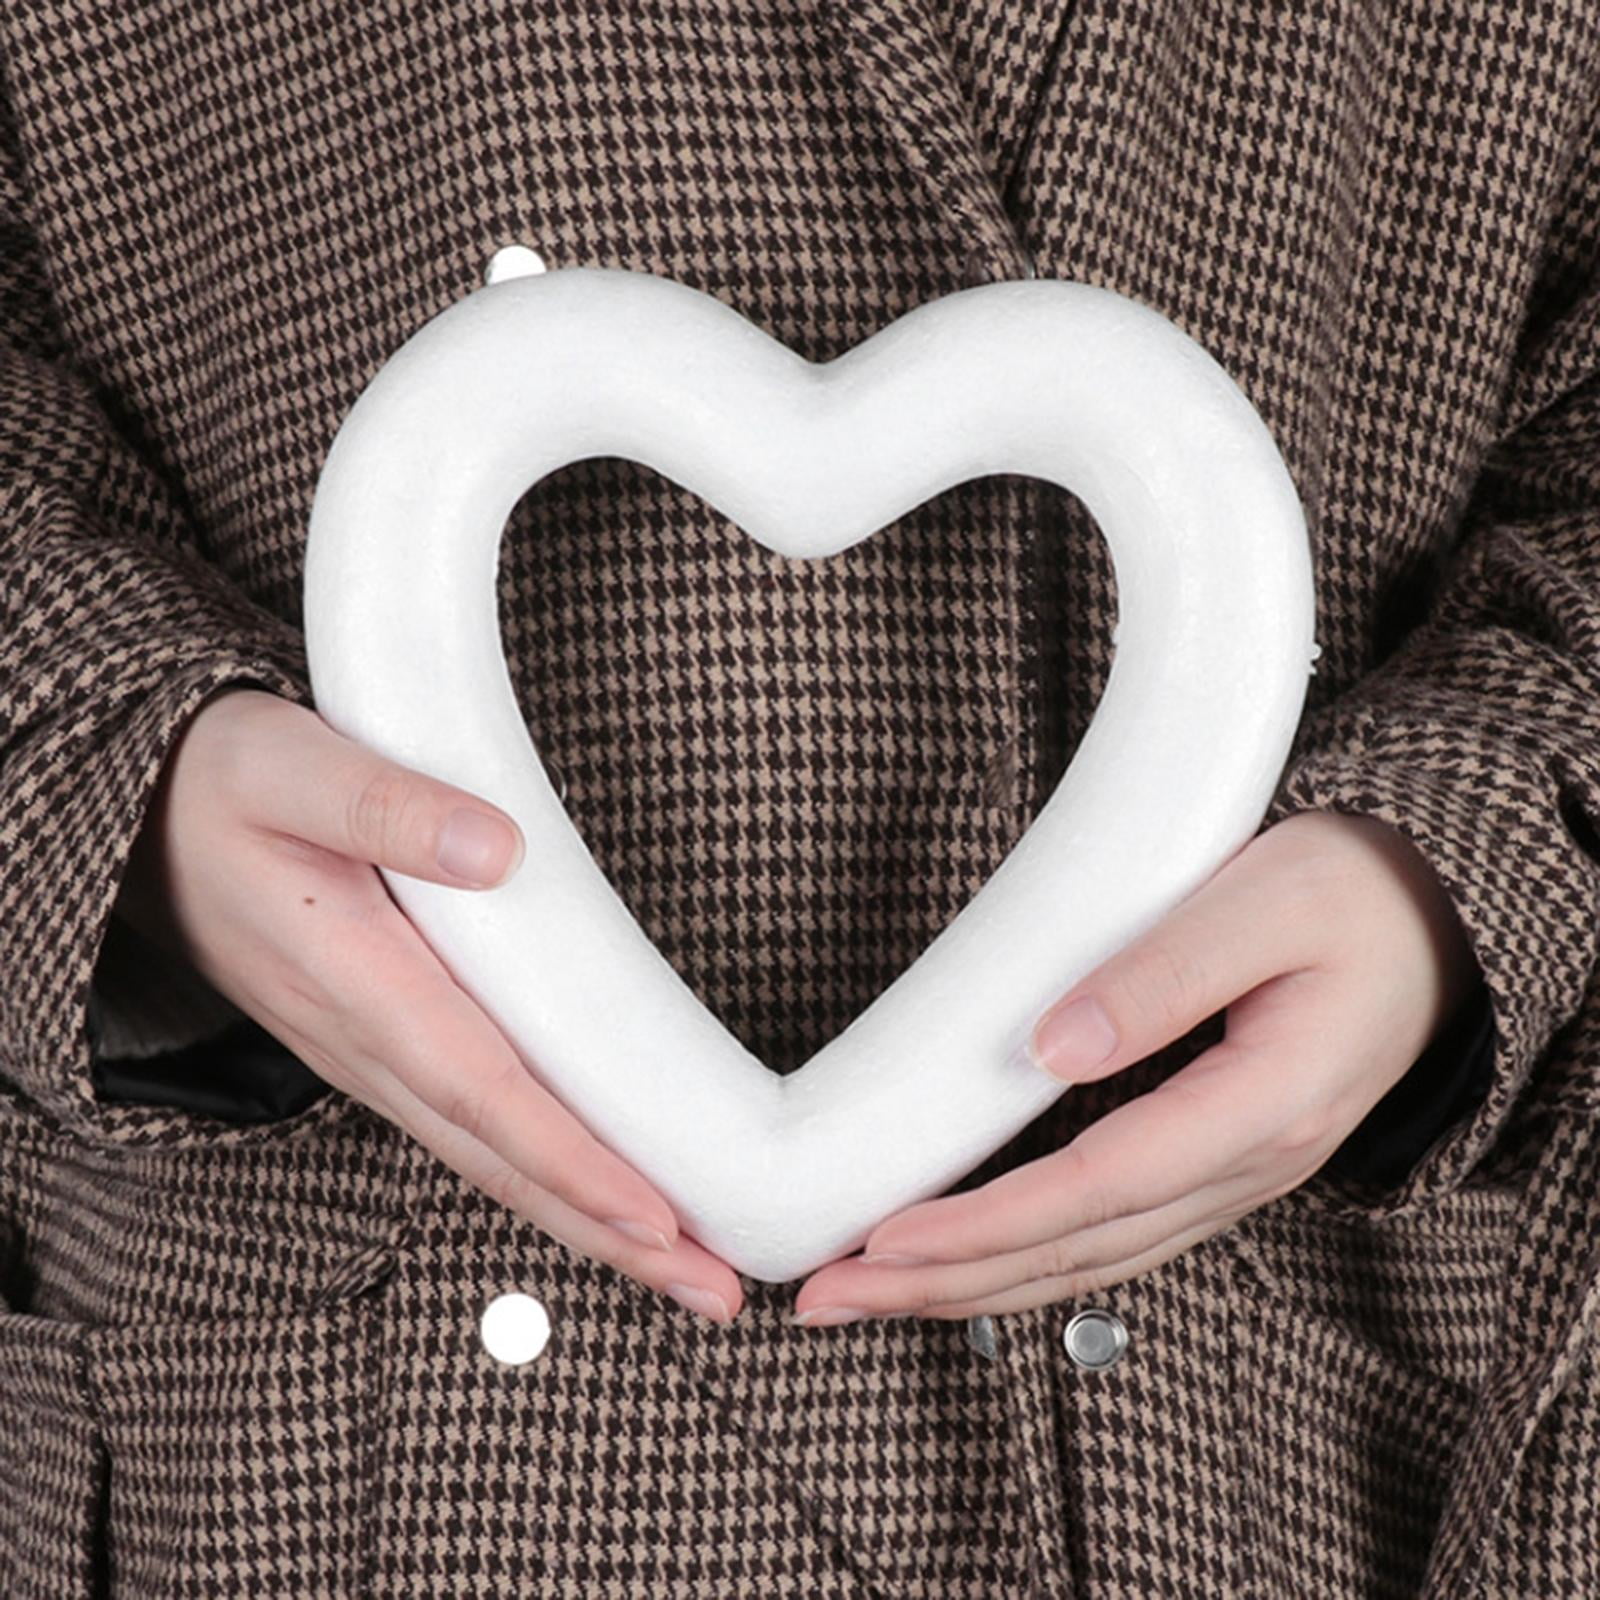 NOLITOY 10pcs Love Bubble Foam Hearts for Crafts Large Wedding Wreath Foam  Valentine Door Wreaths Foam Heart Wreaths for Crafts Frames Wedding Stuff